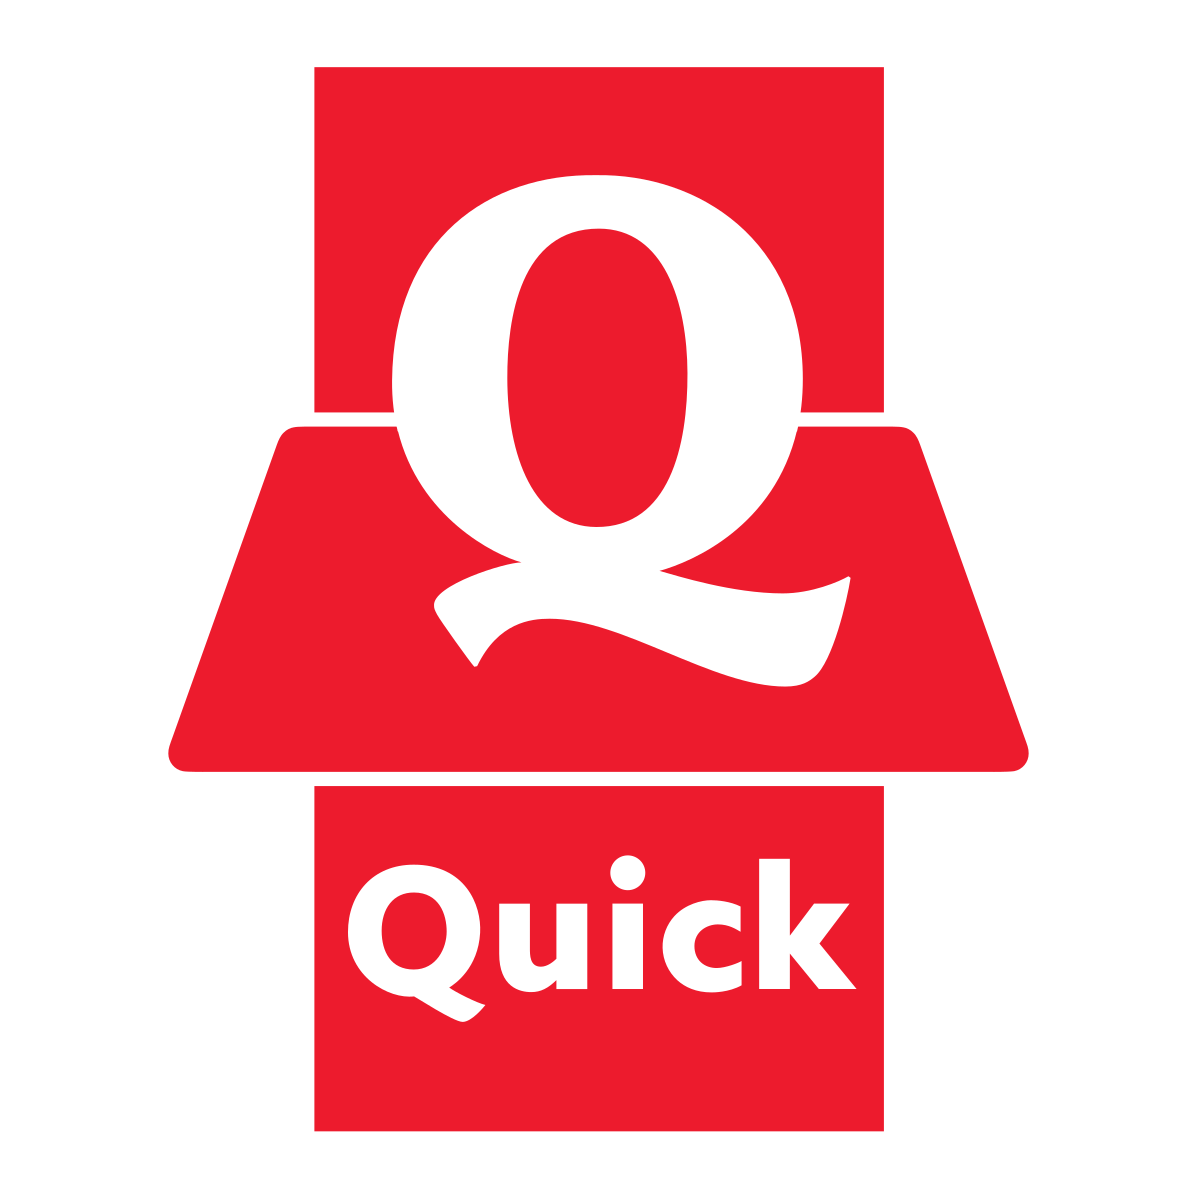 logo Quick